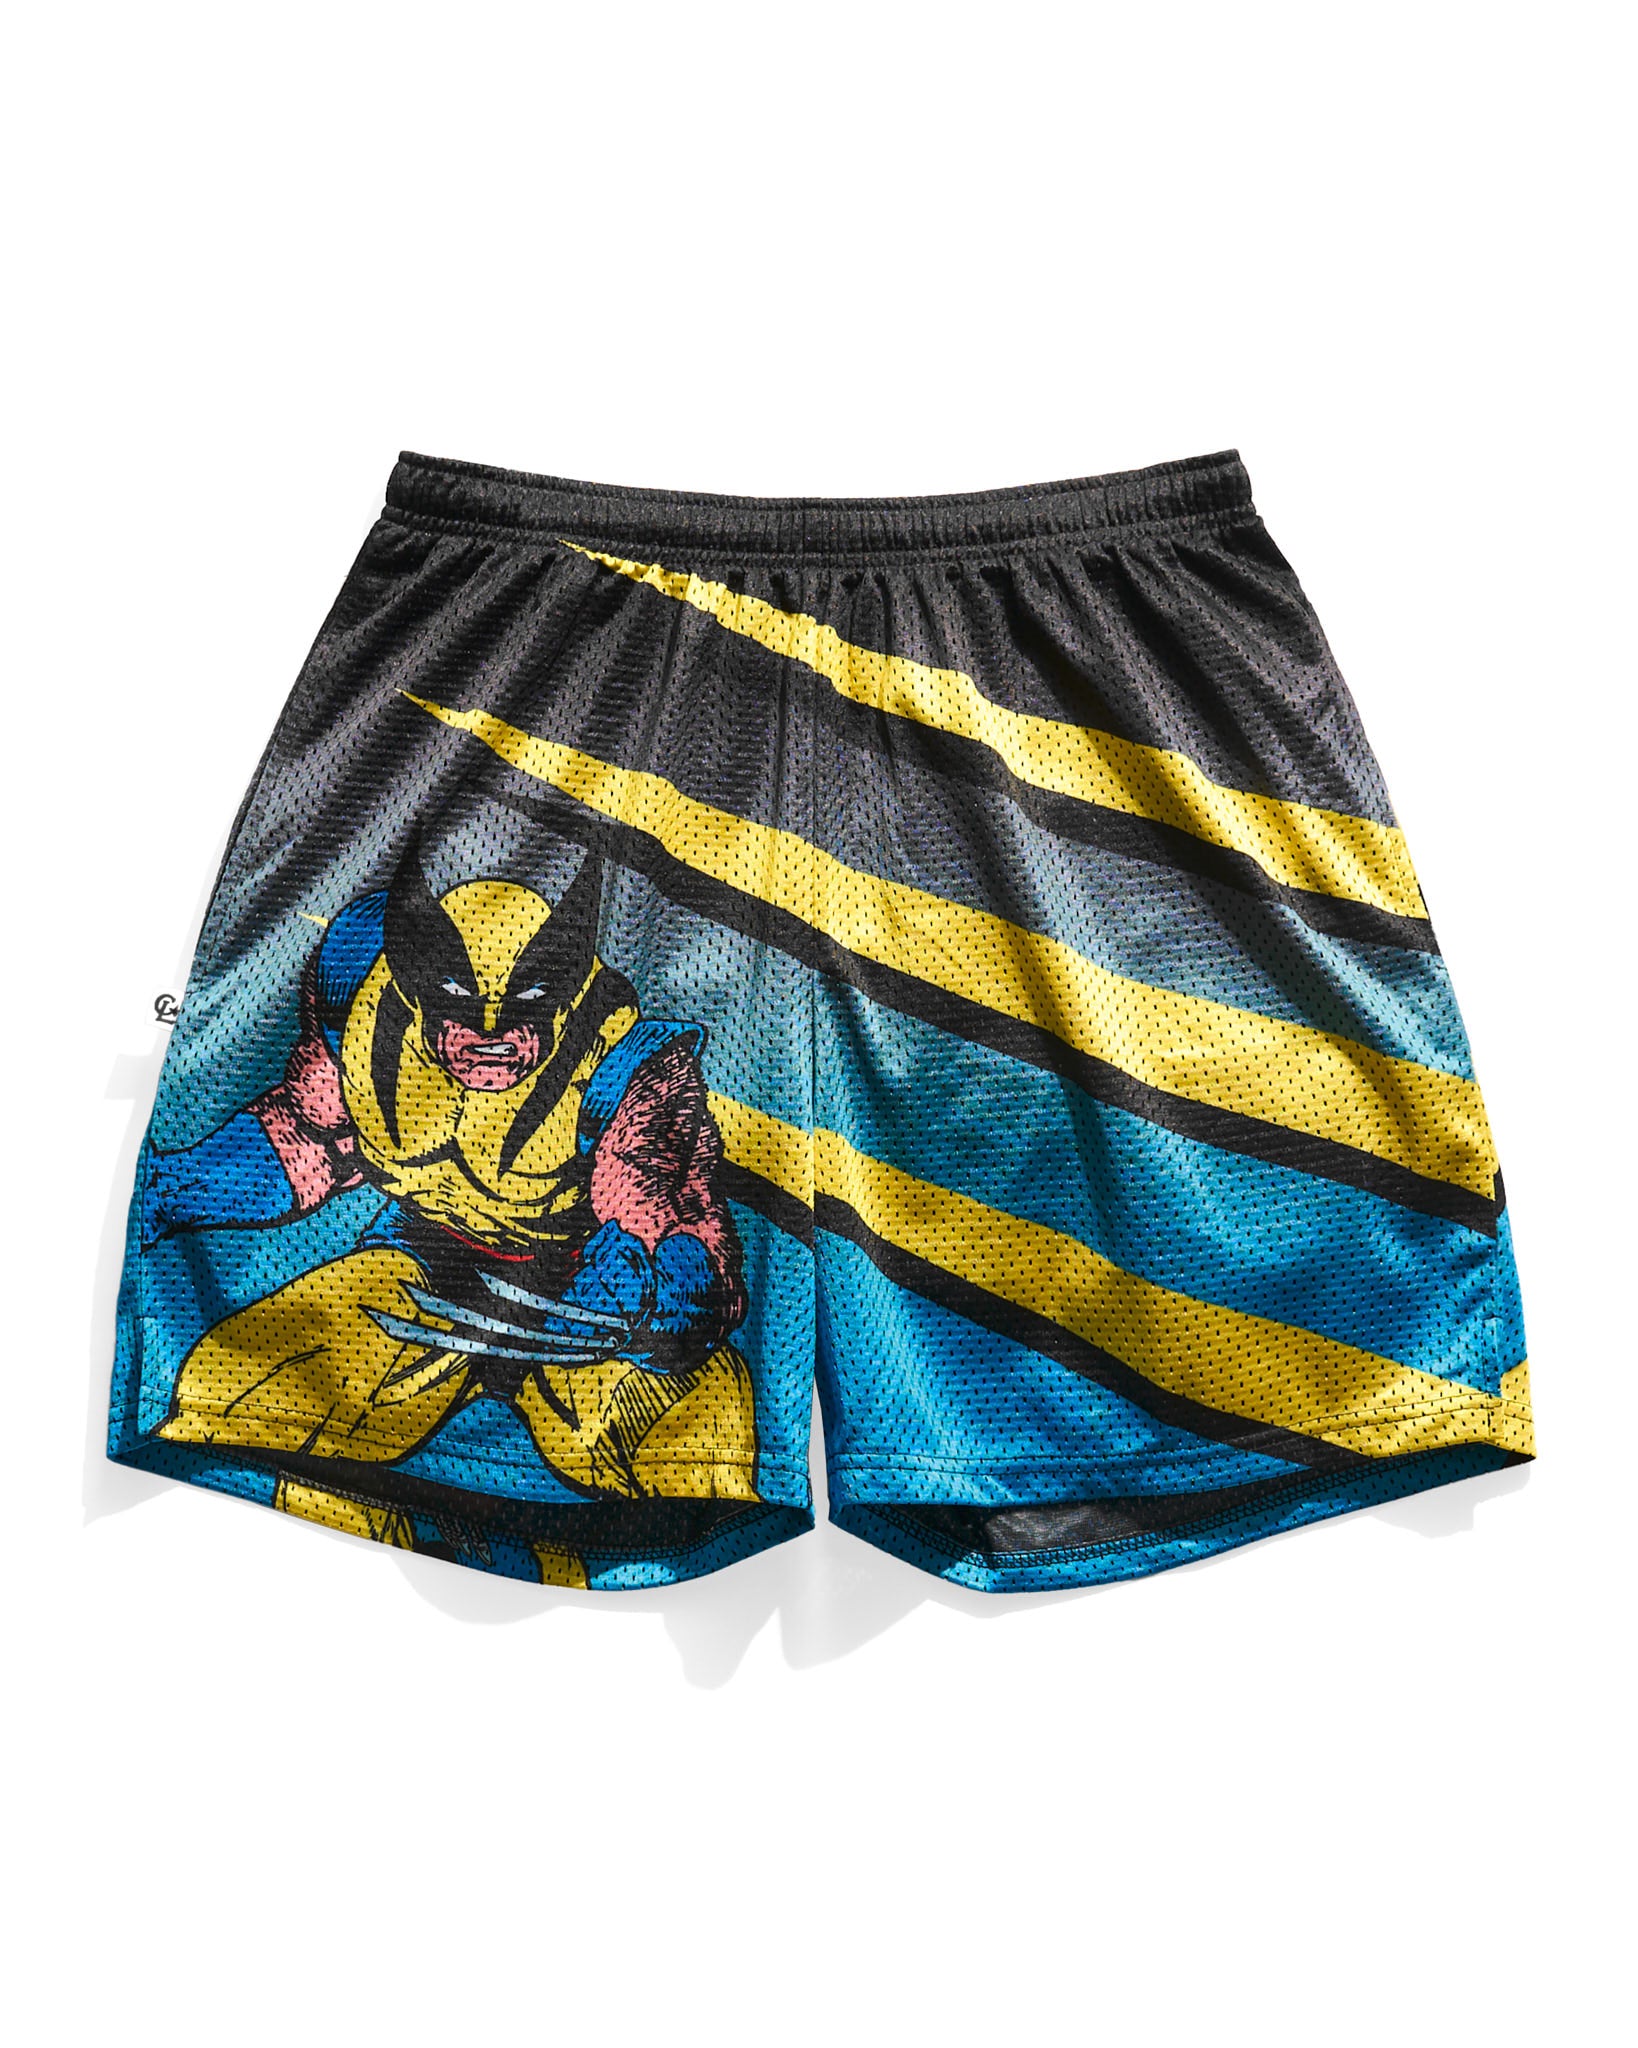 Wolverine Slashes Retro Shorts